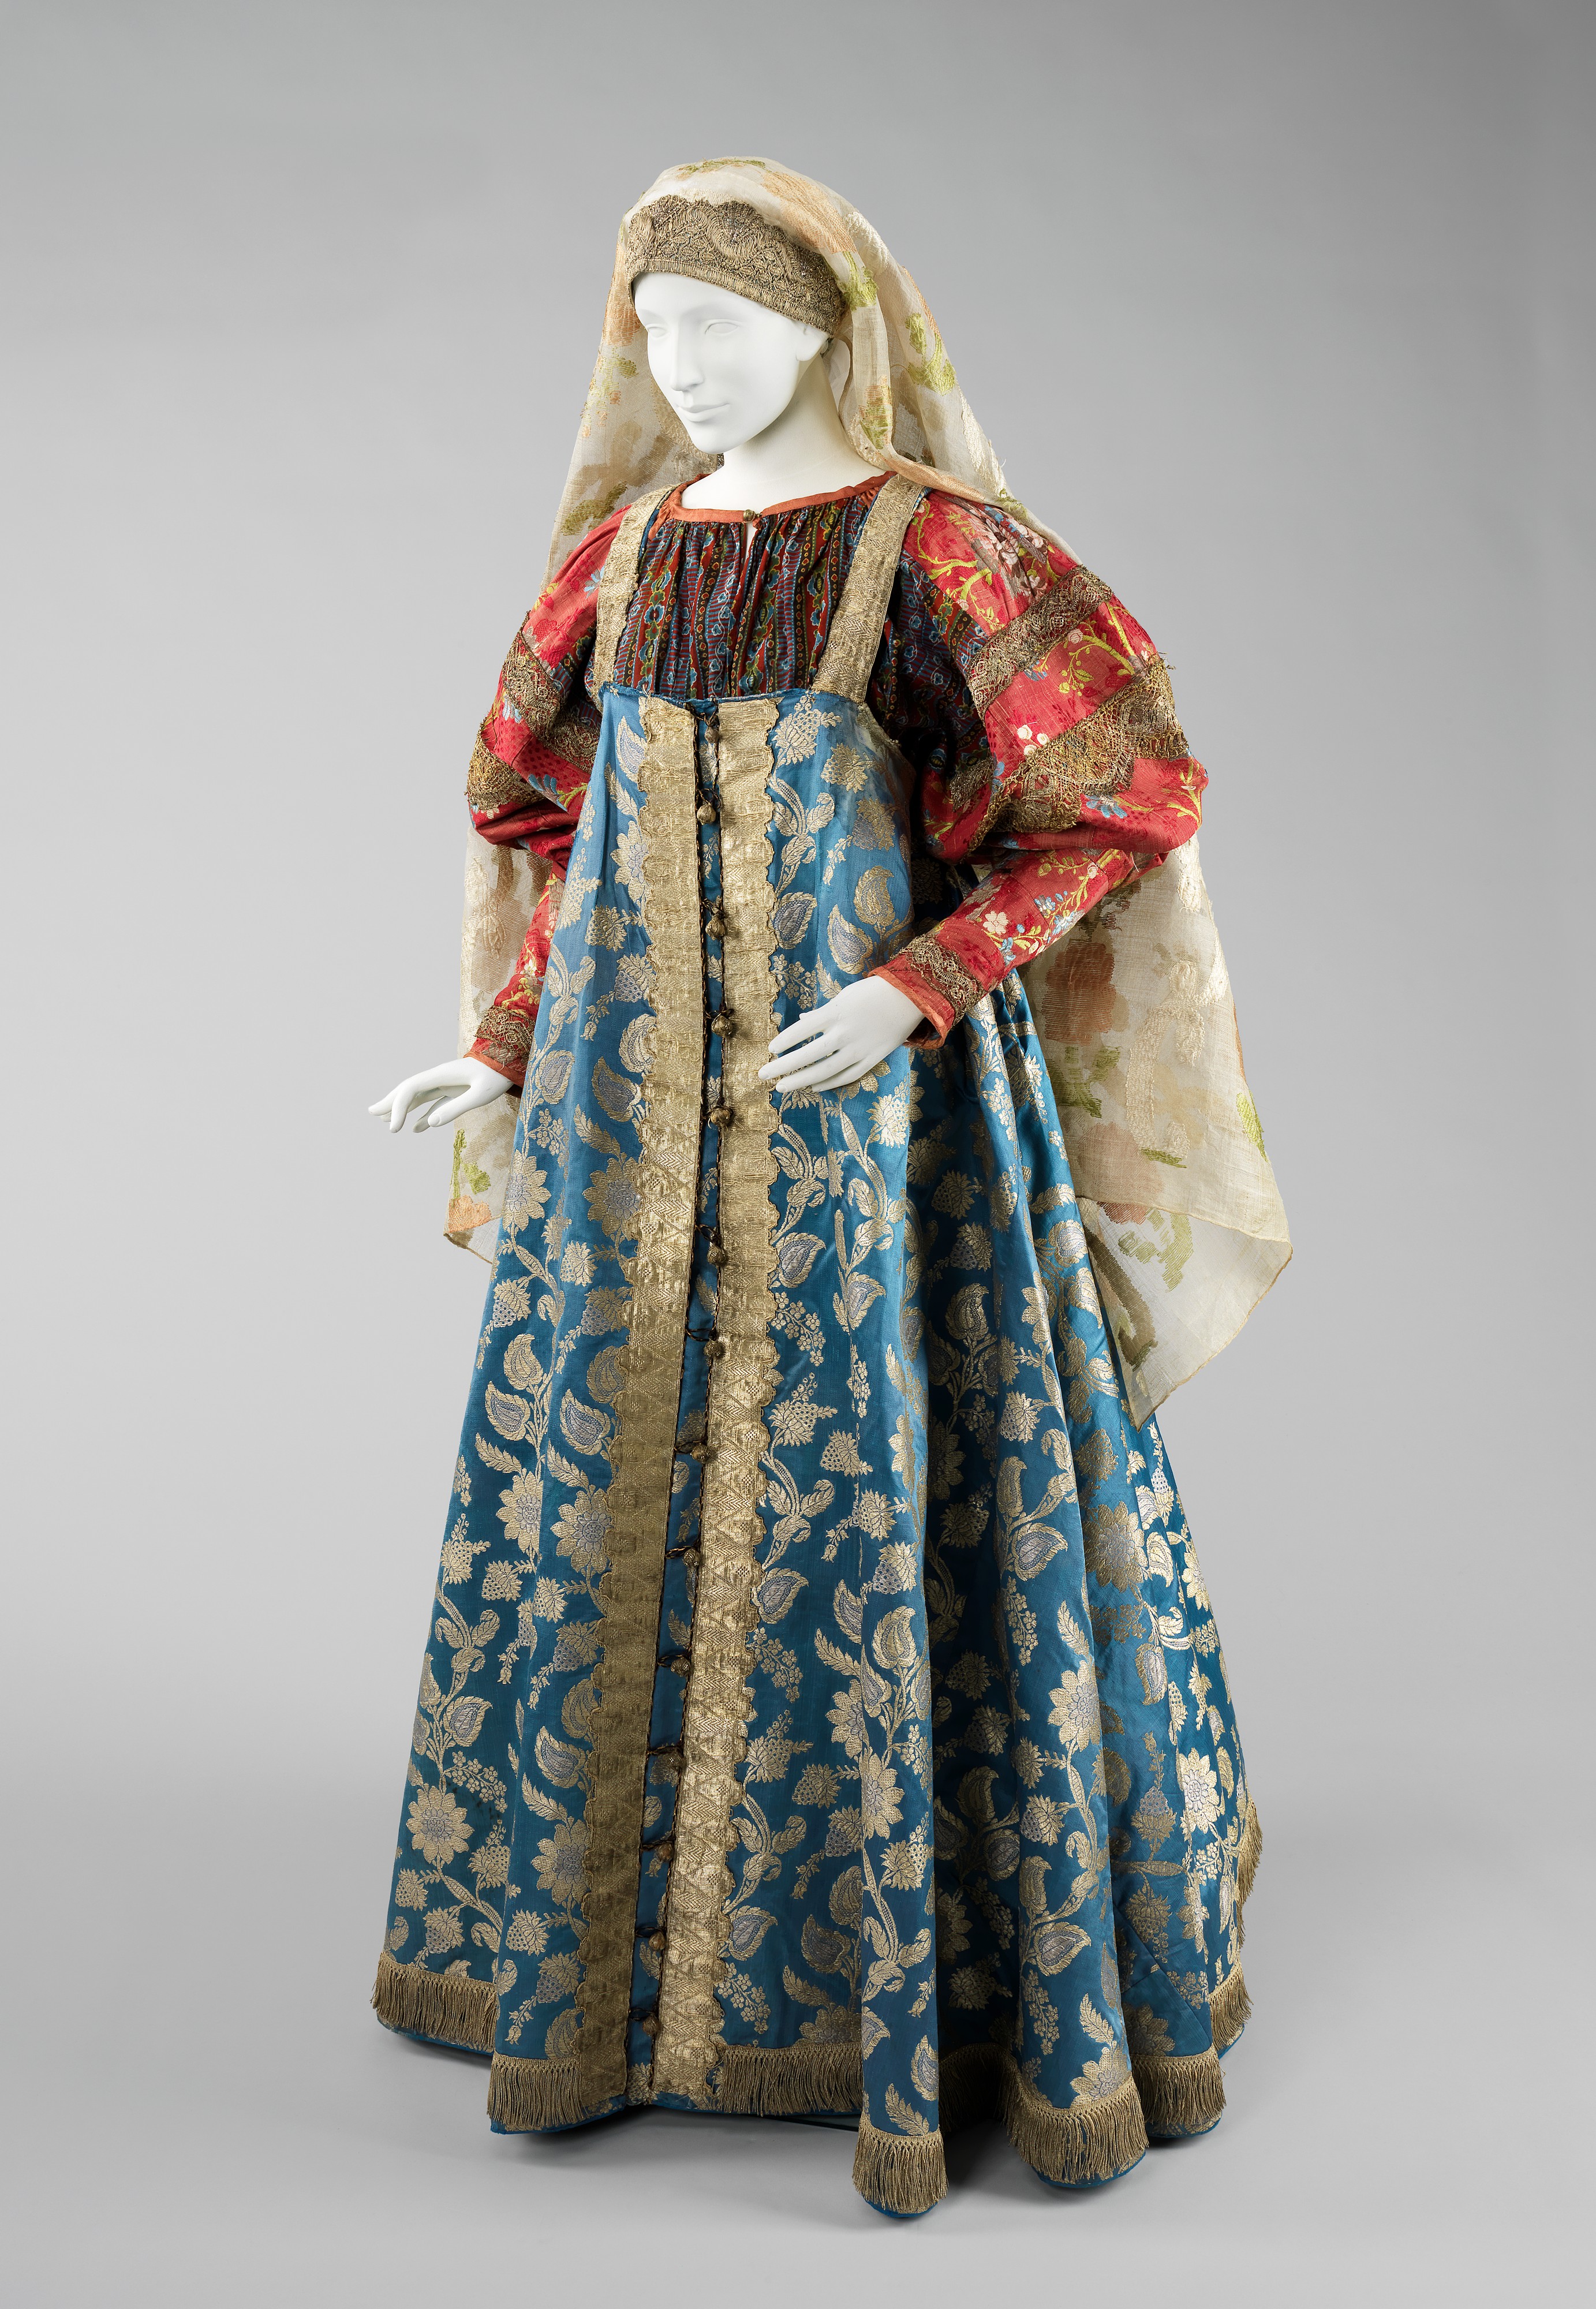 russian traditional dress